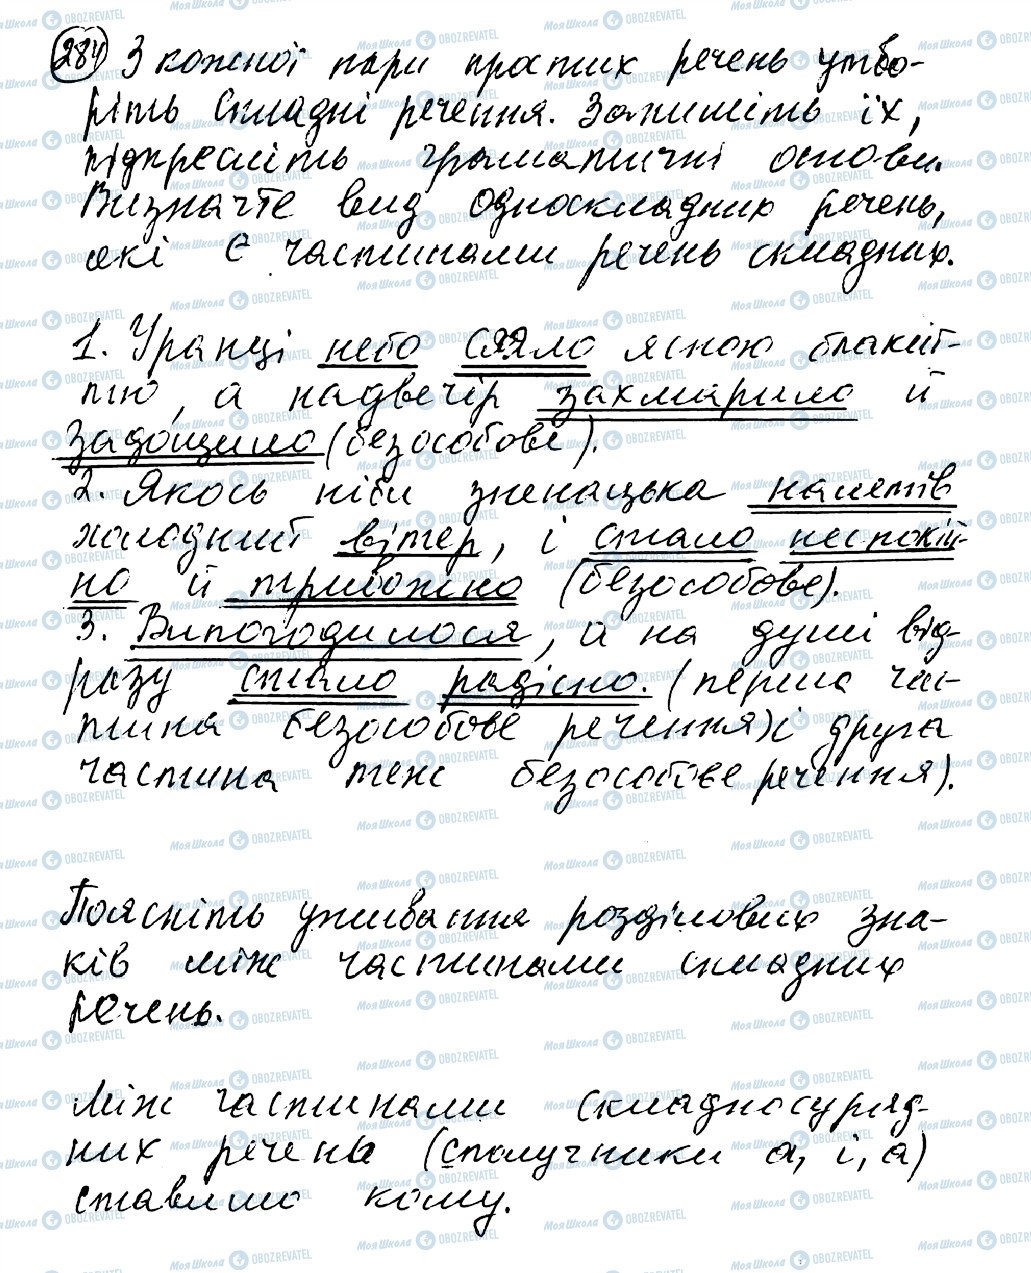 ГДЗ Укр мова 8 класс страница 284